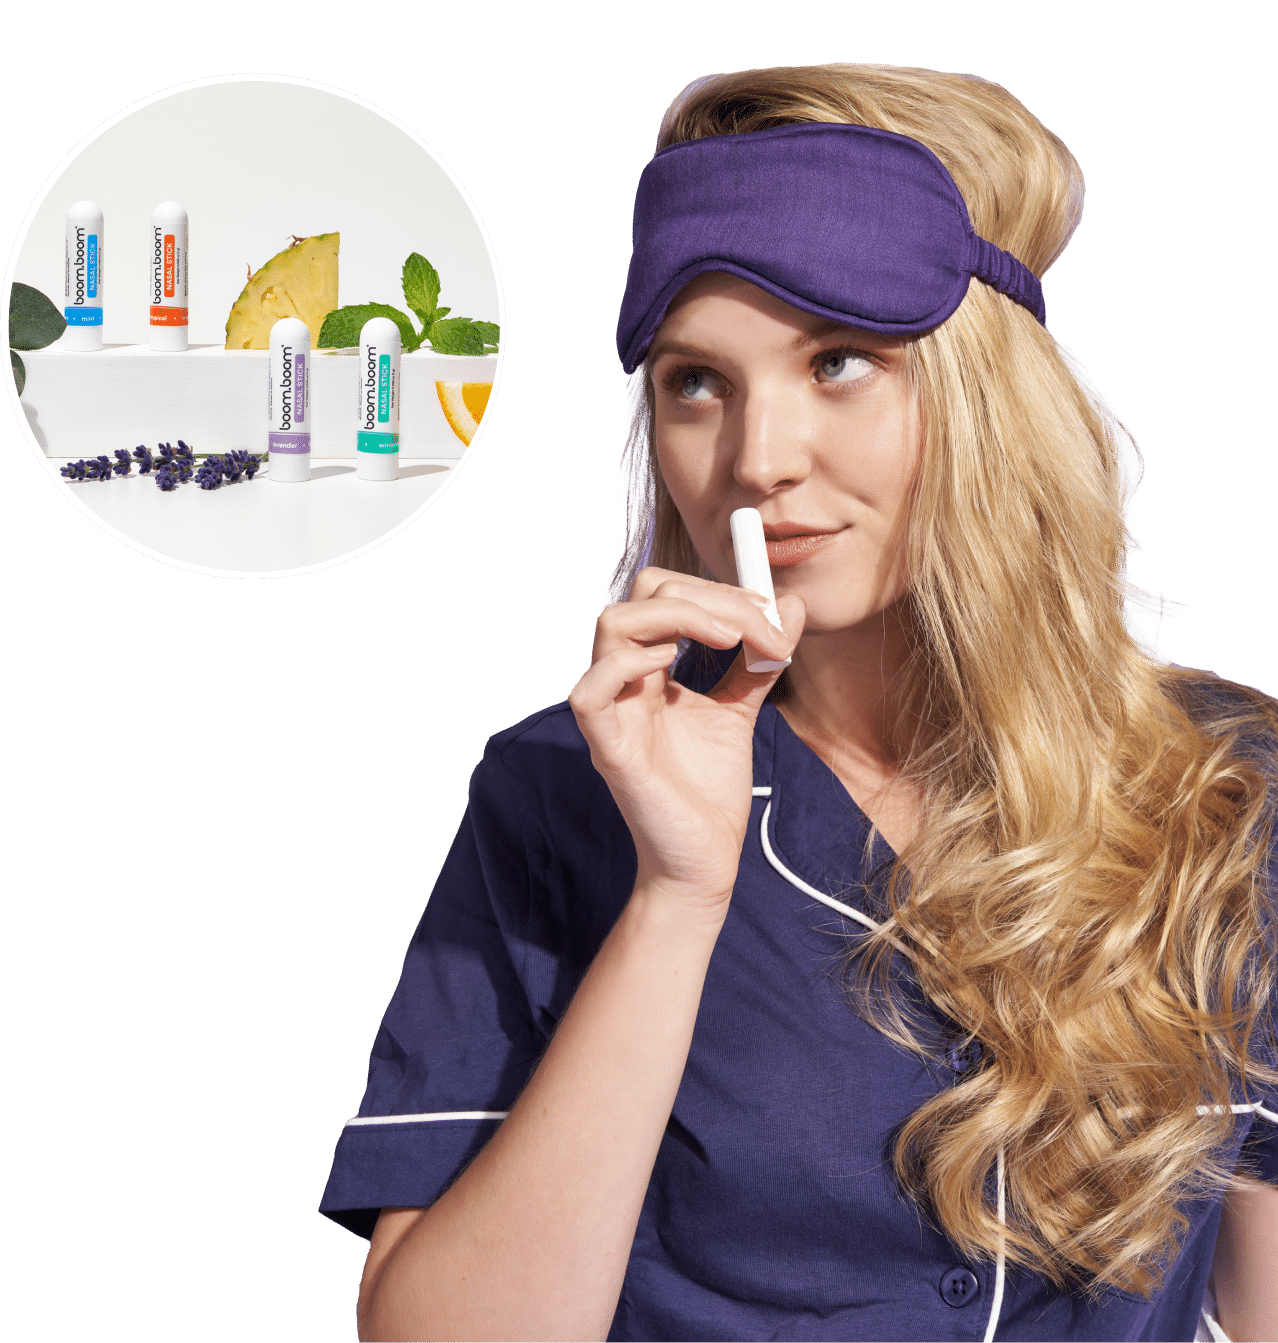 Free BoomBoom Lavender Nasal Stick at CVS